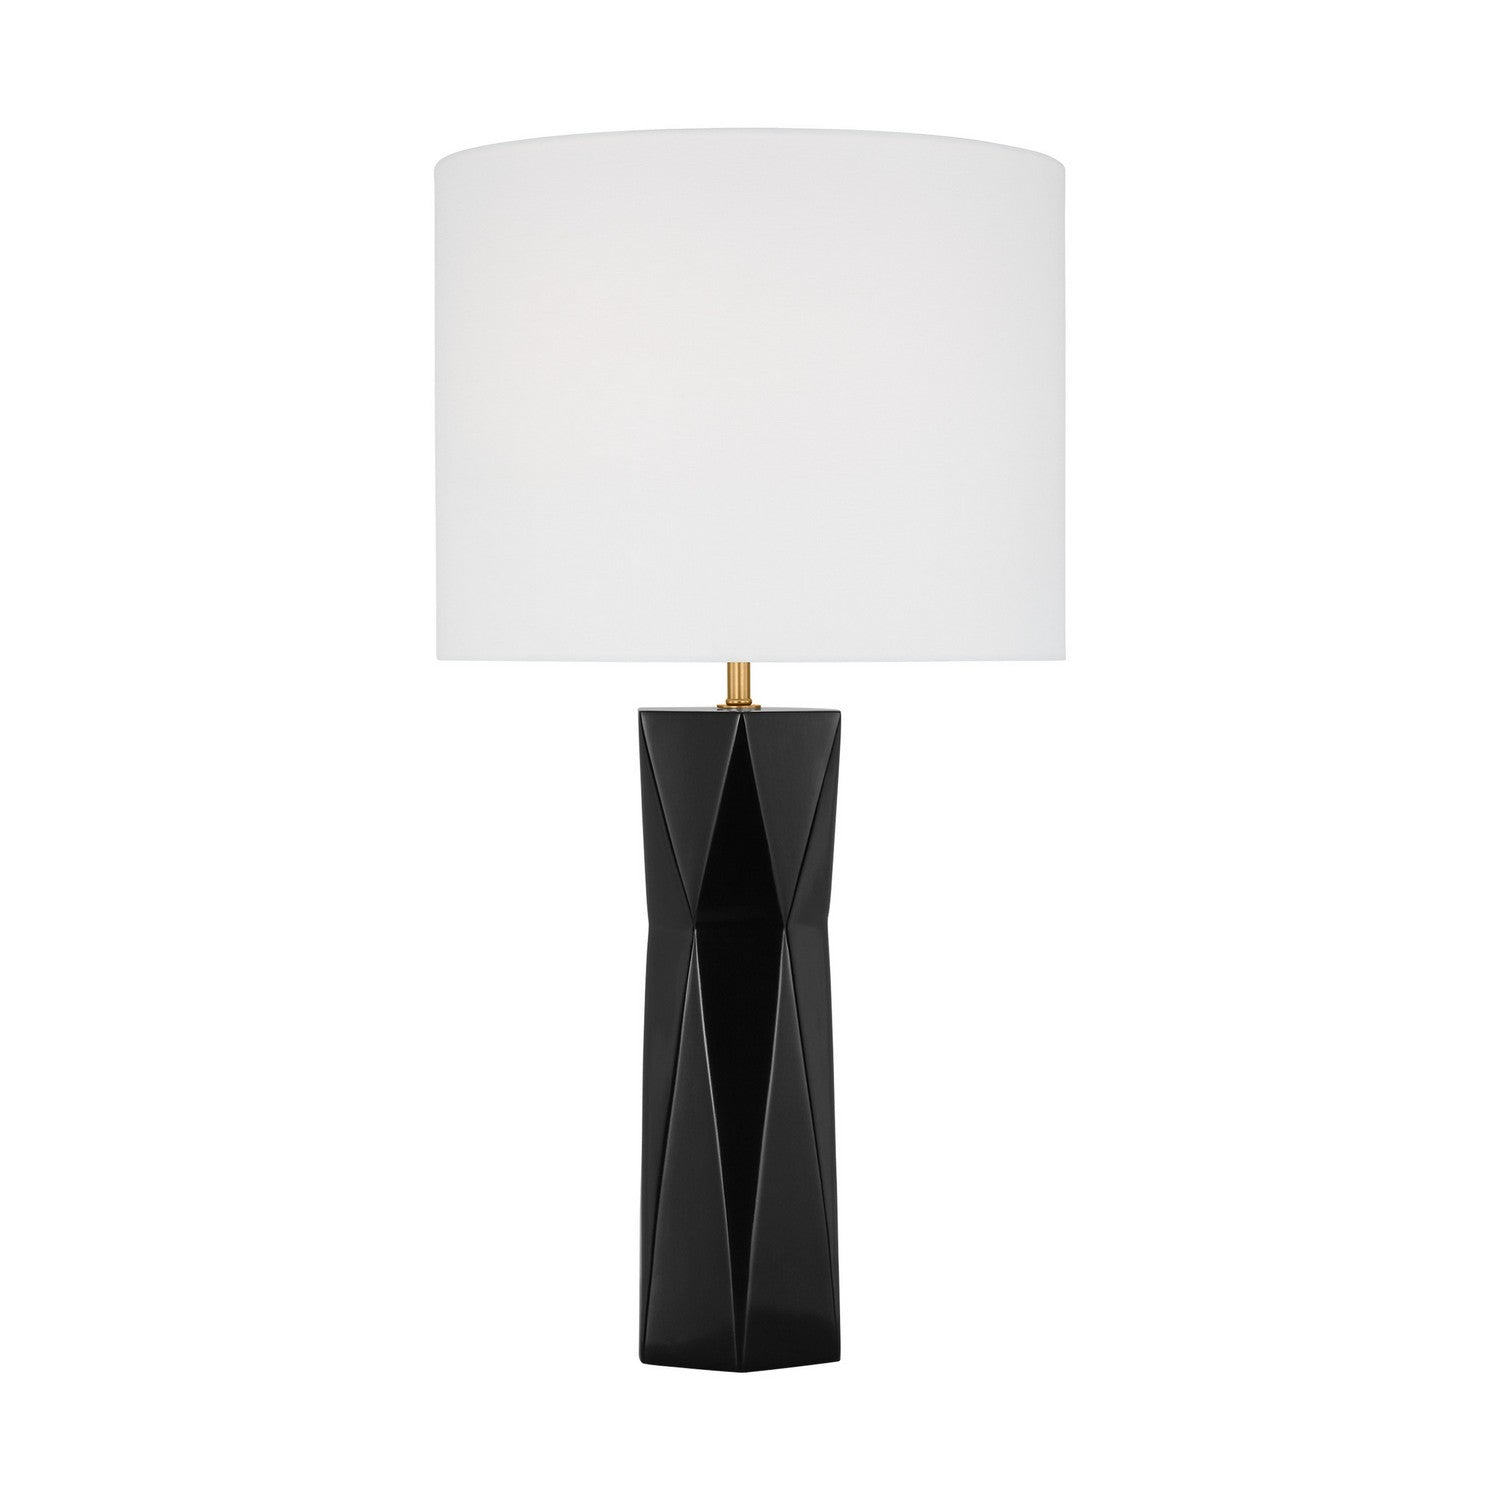 Visual Comfort Studio Canada - DJT1061GBK1 - One Light Table Lamp - Fernwood - Gloss Black